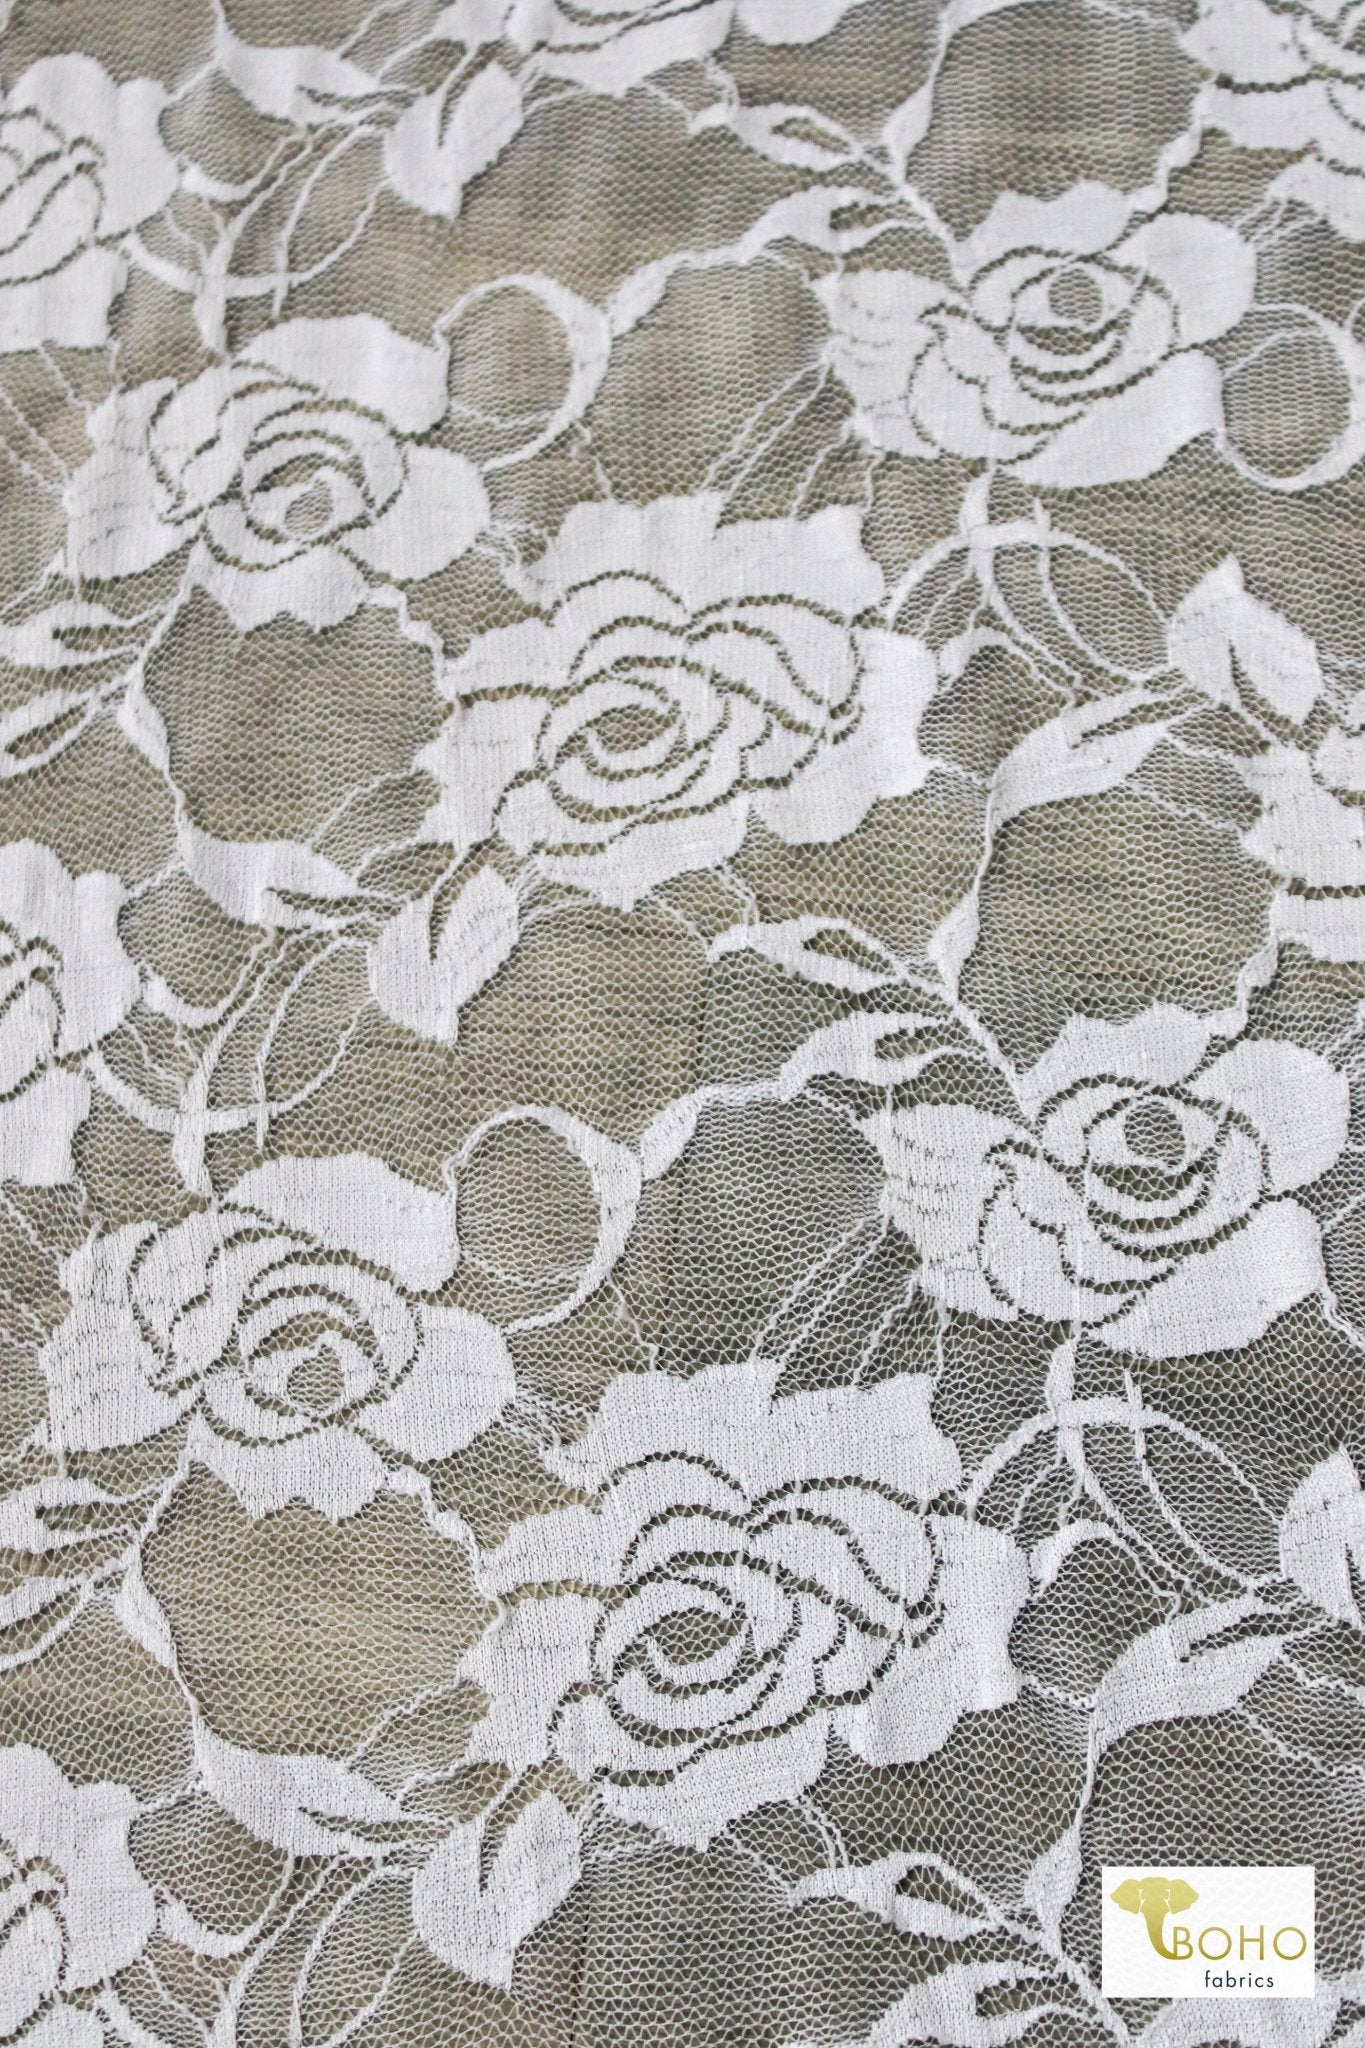 Rose Dream in White. Stretch Lace Knit. SL-121-WHT - Boho Fabrics